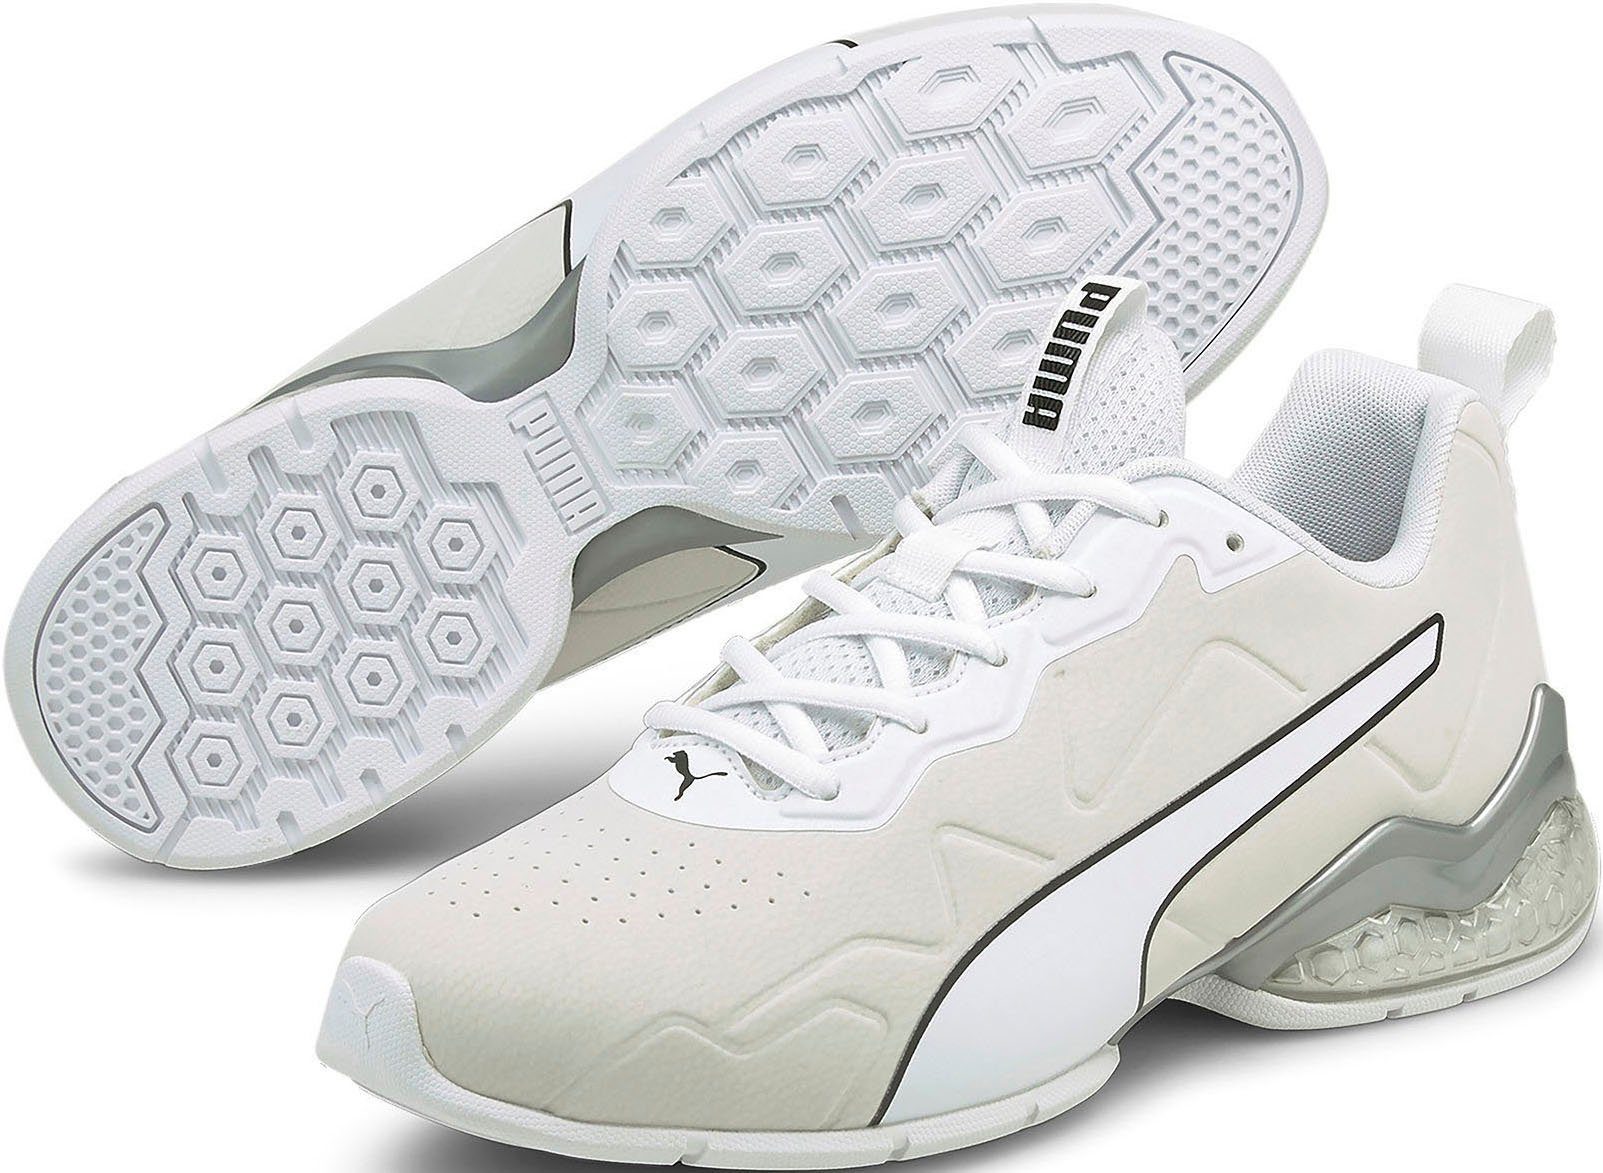 PUMA »CELL VALIANT SL« Sneaker online kaufen | OTTO